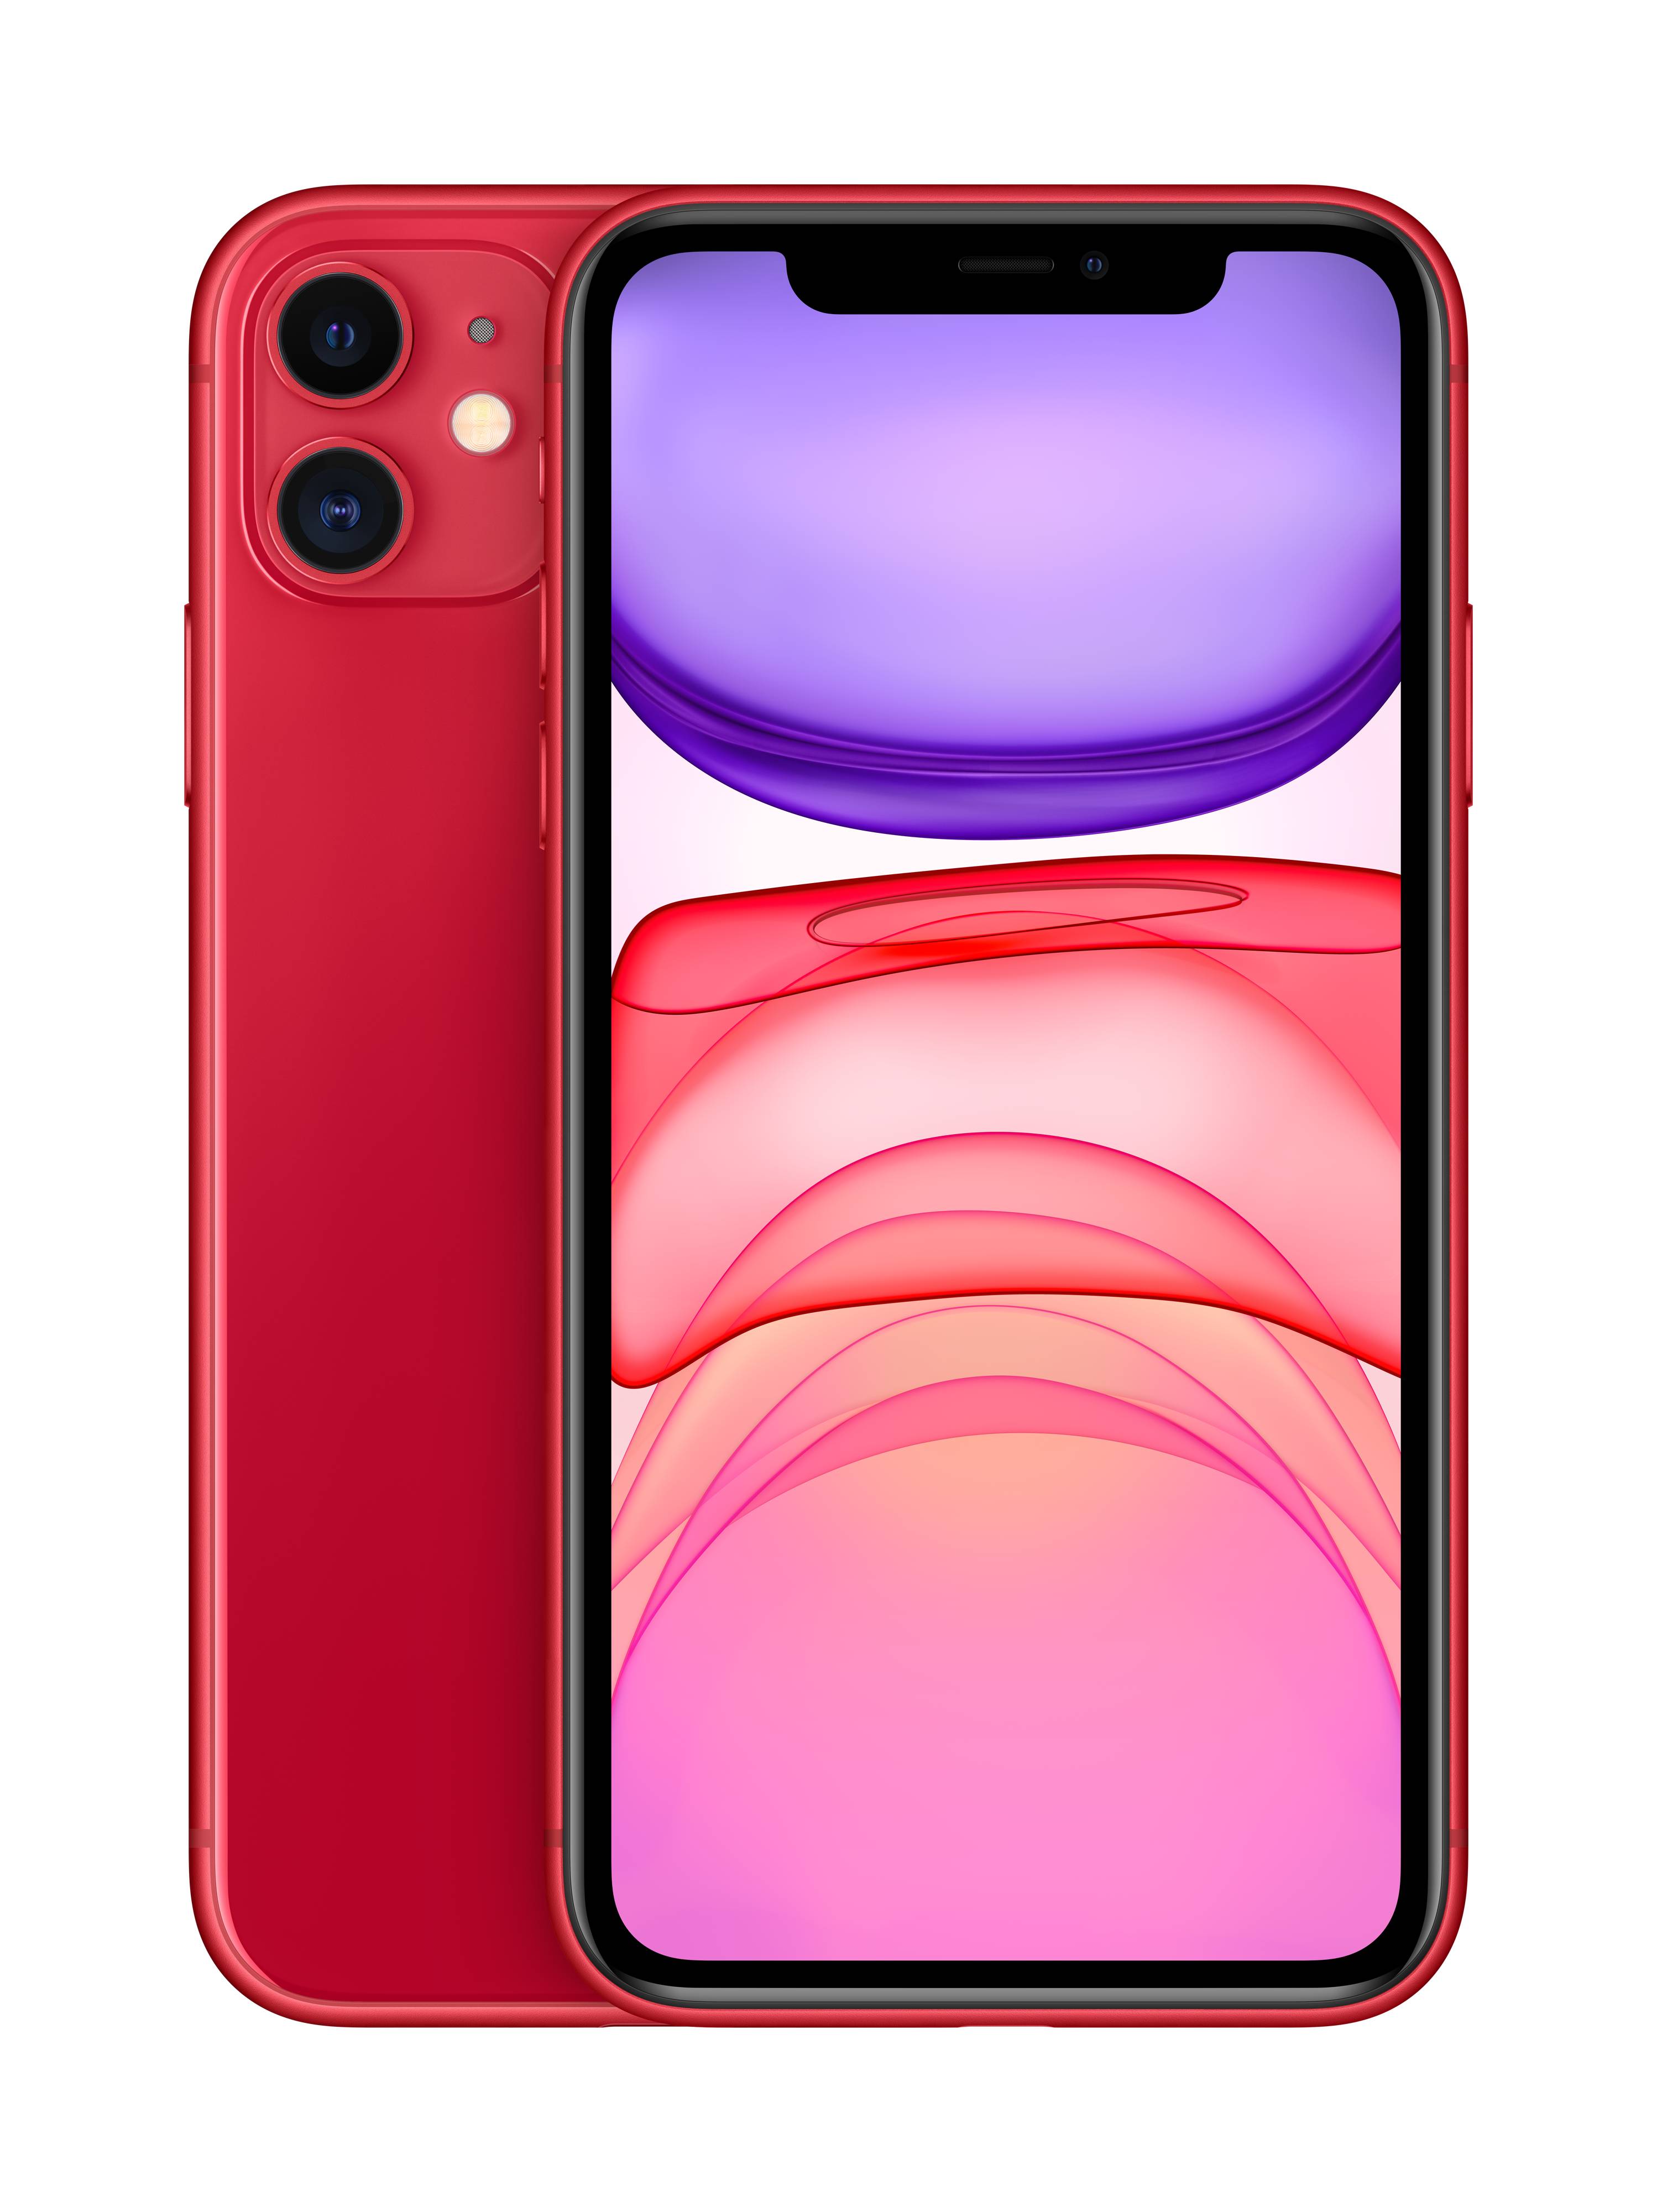 Apple Iphone 11 Iphone 64 Gb 6 1 Inch 15 5 Cm Ios 13 12 Mp Product Red Conrad Com